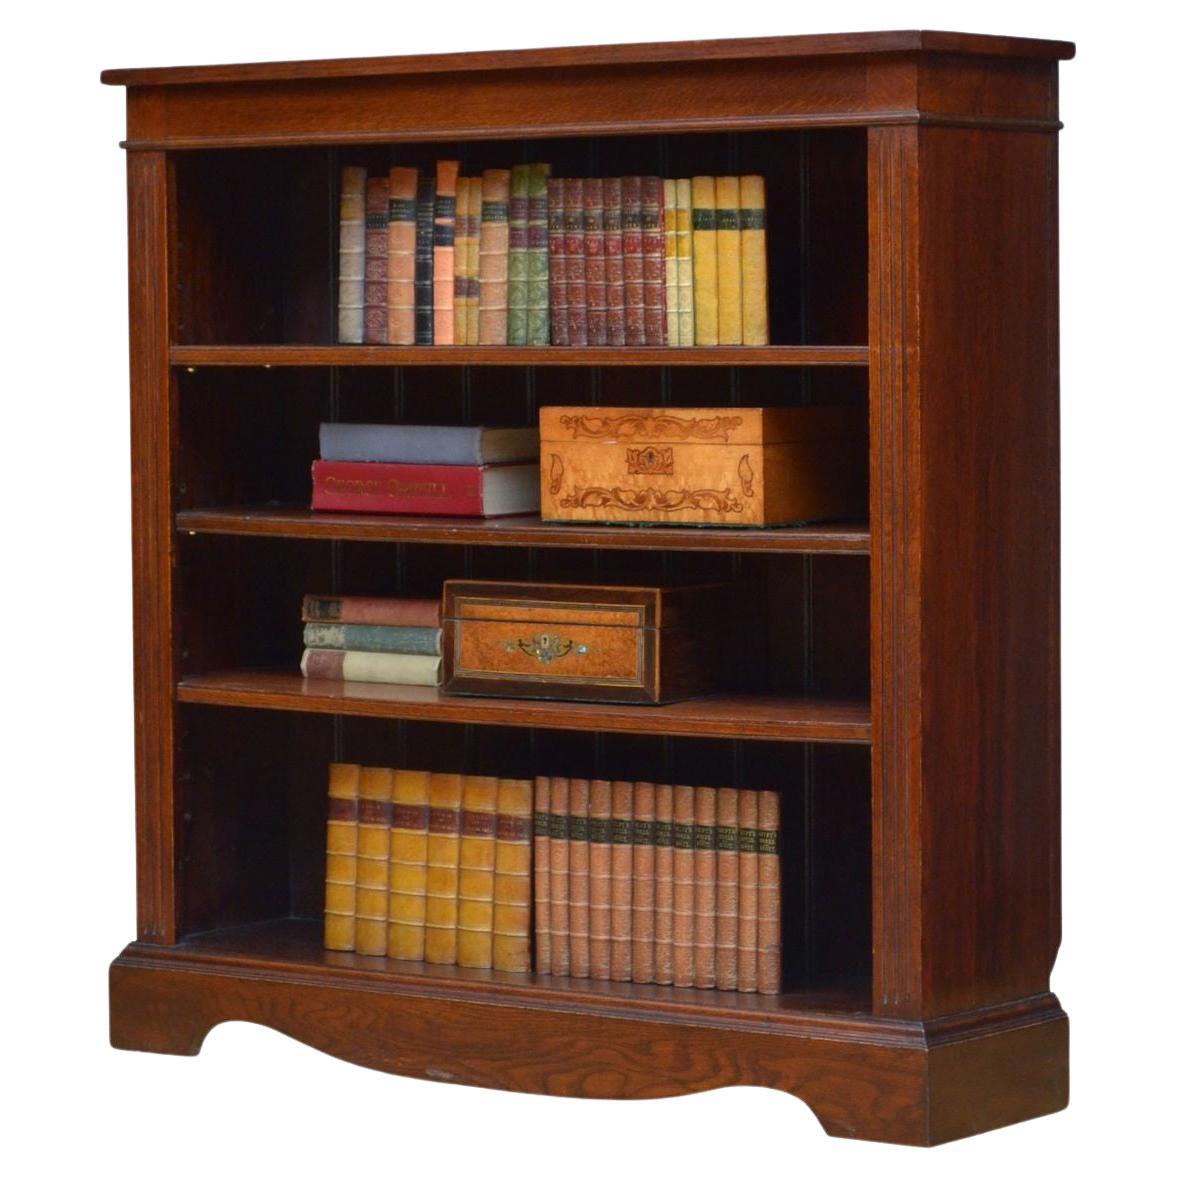 Late Victorian Solid Oak Open Bookcase